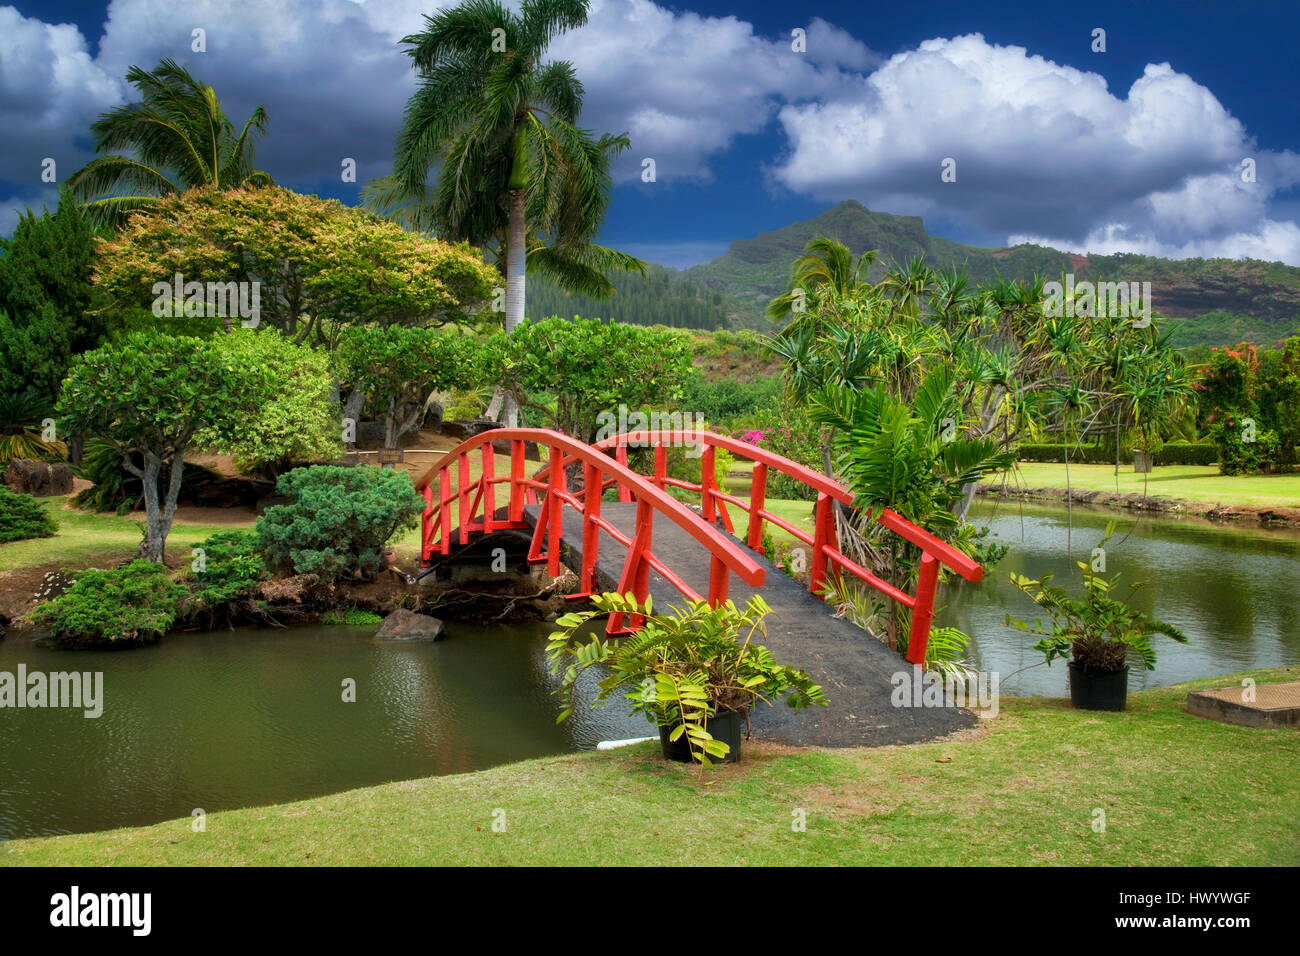 Ponte per giardini giapponesi. Smith ha giardini tropicali. Kauai, Hawaii. Foto Stock